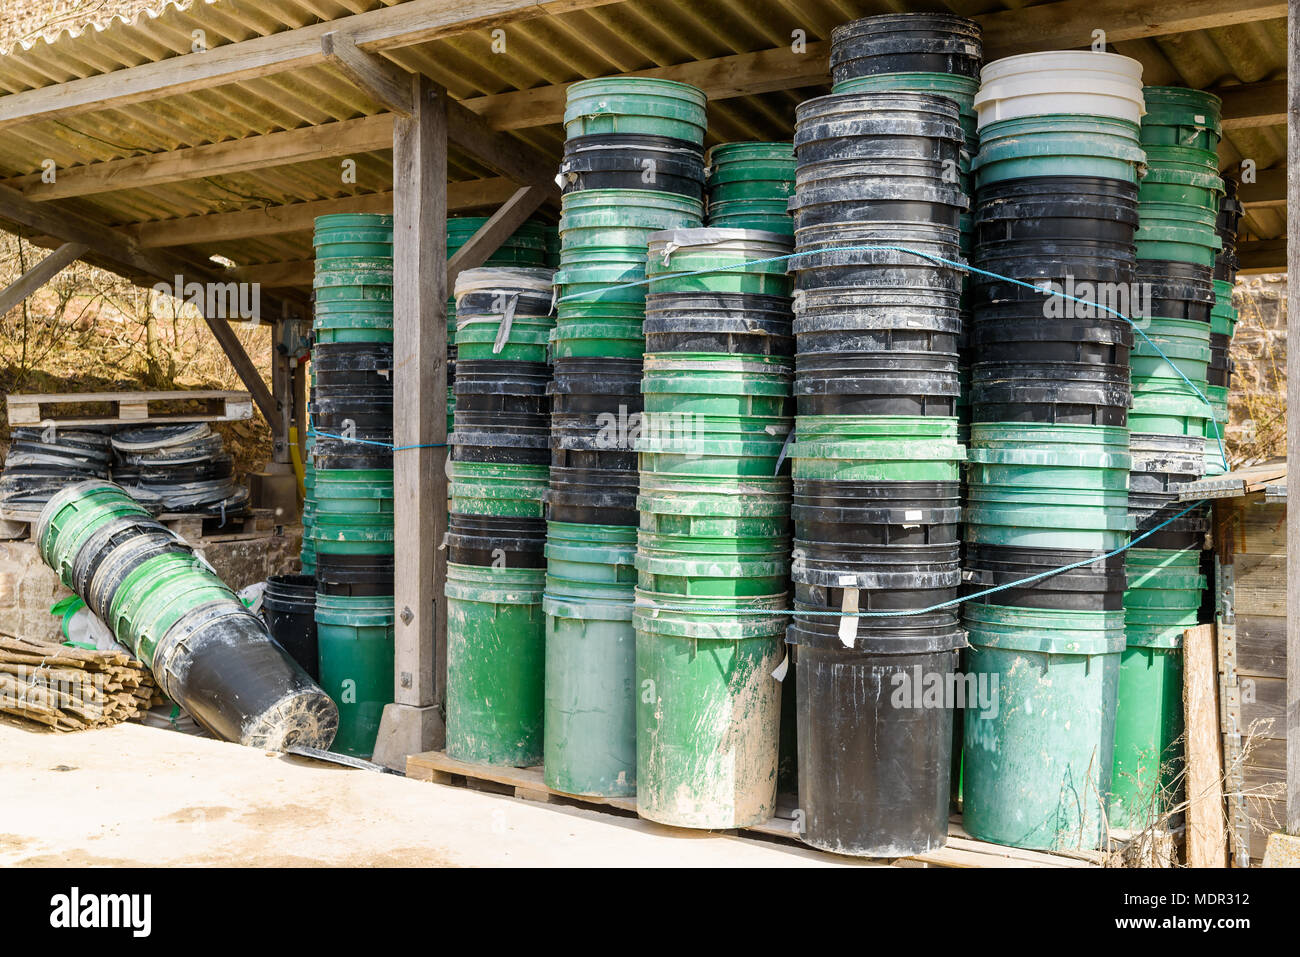 Outdoor storage of plastic barrels or buckets Stock Photo ...